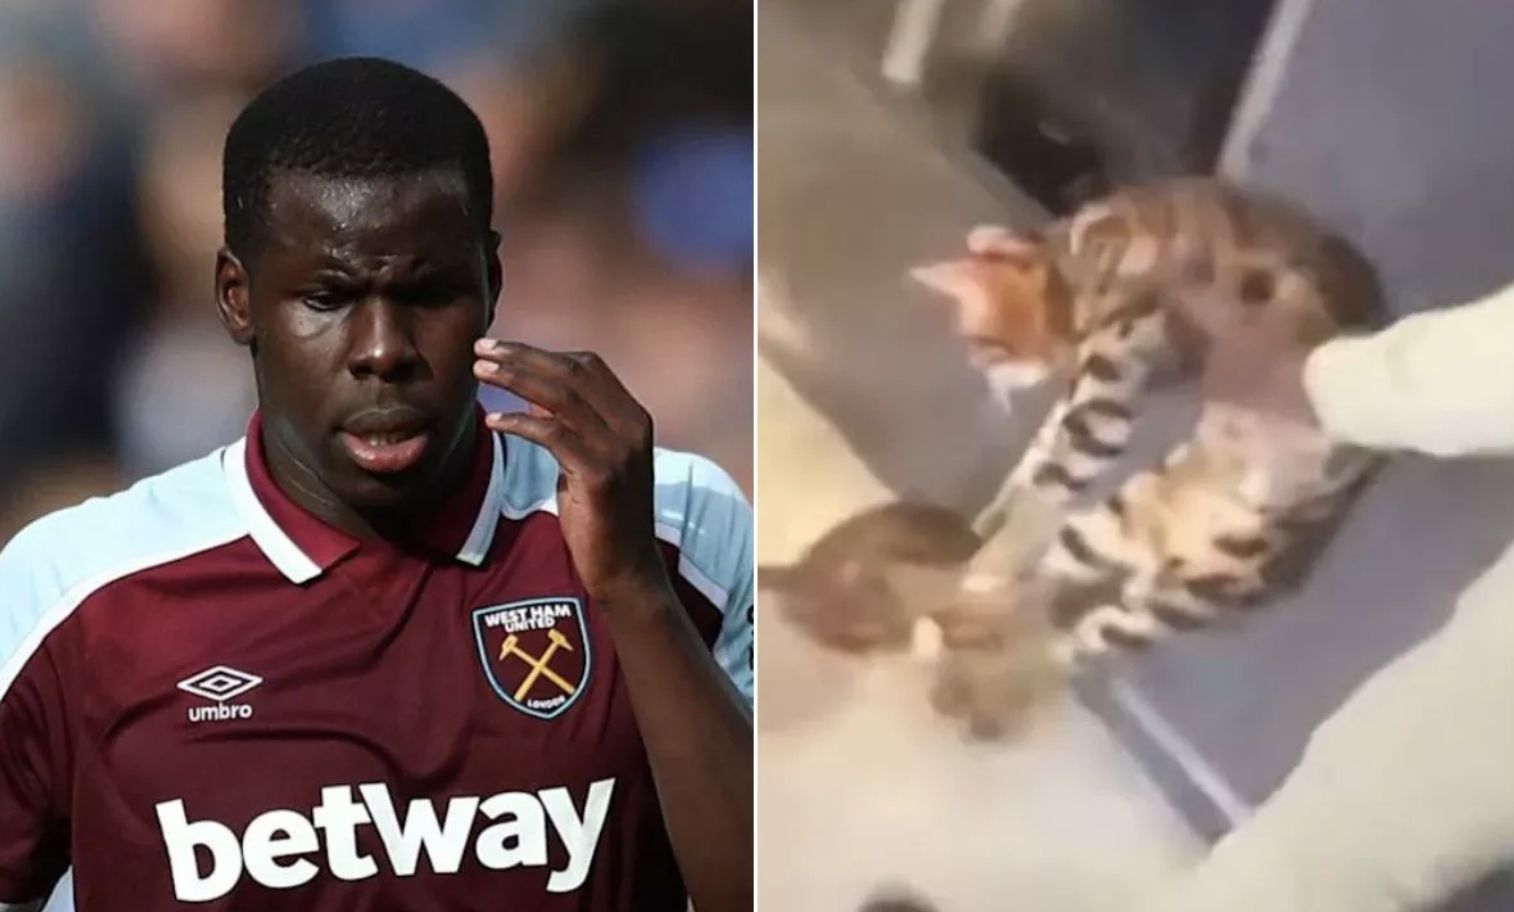 West Ham footballer Zouma handed community service for cat cruelty